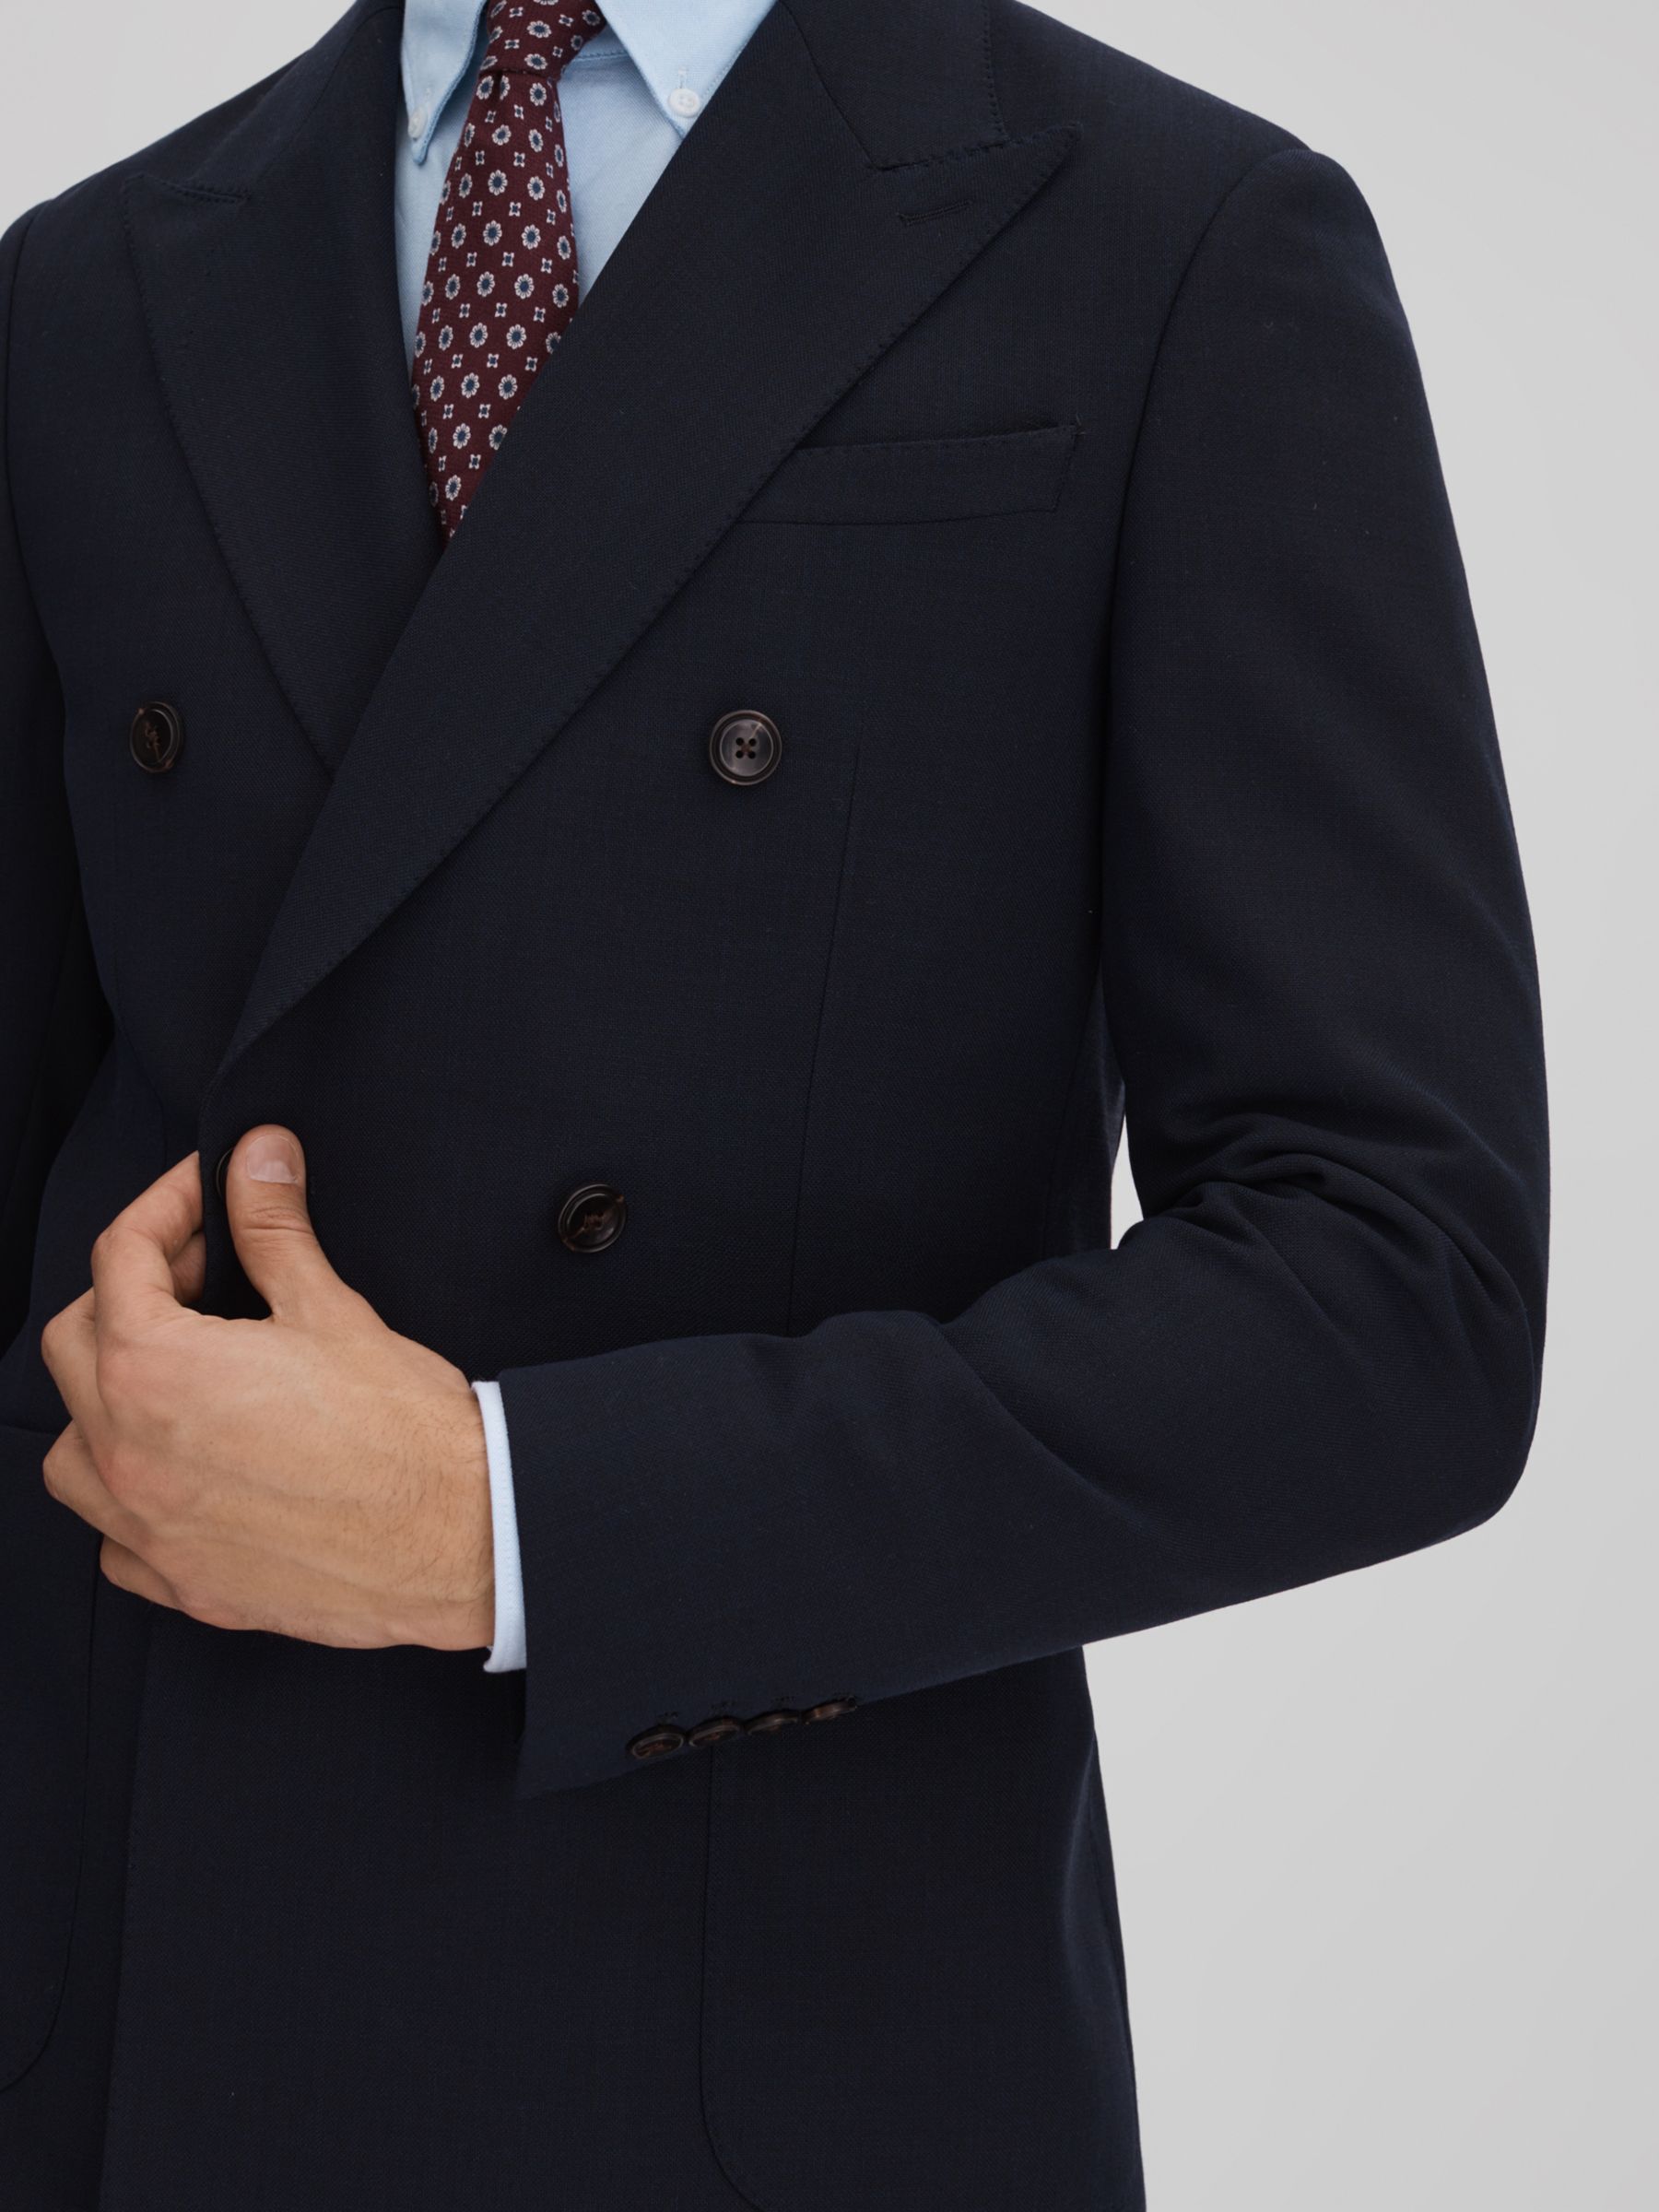 Reiss Belmont Wool Blend Suit Jacket, Navy, 38